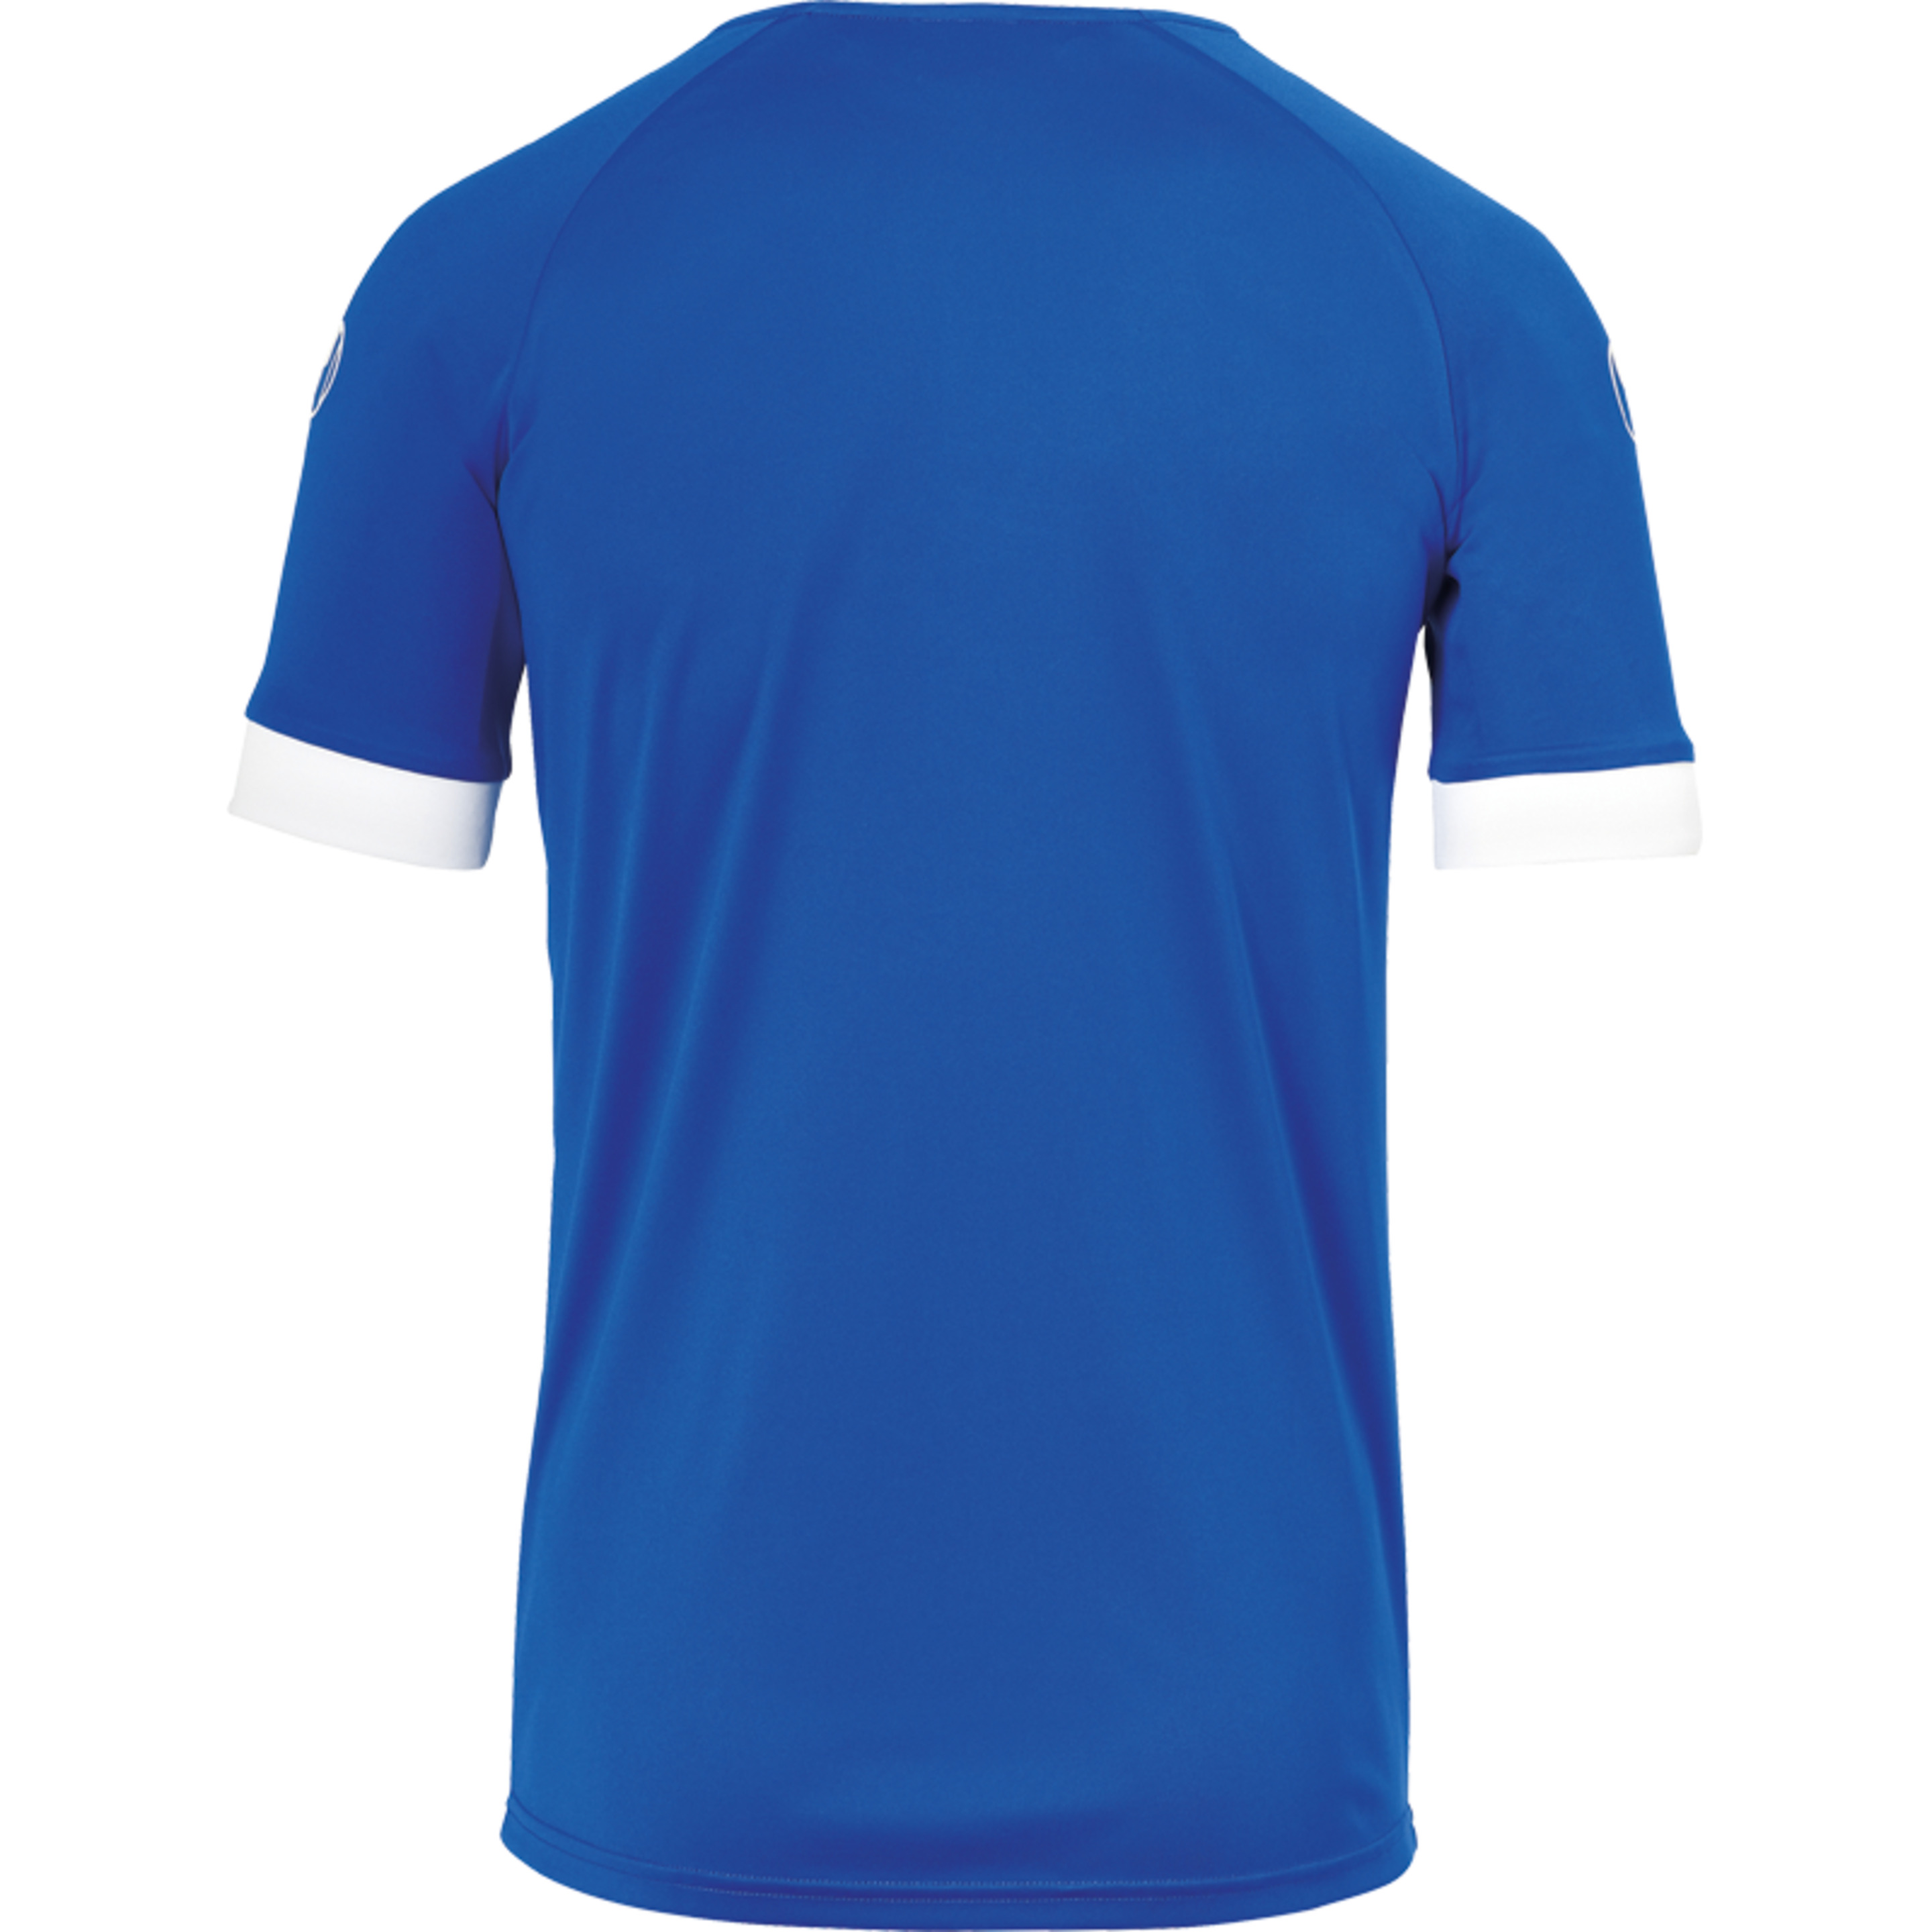 Division Ii Shirt Shortsleeved Azur/blanco Uhlsport